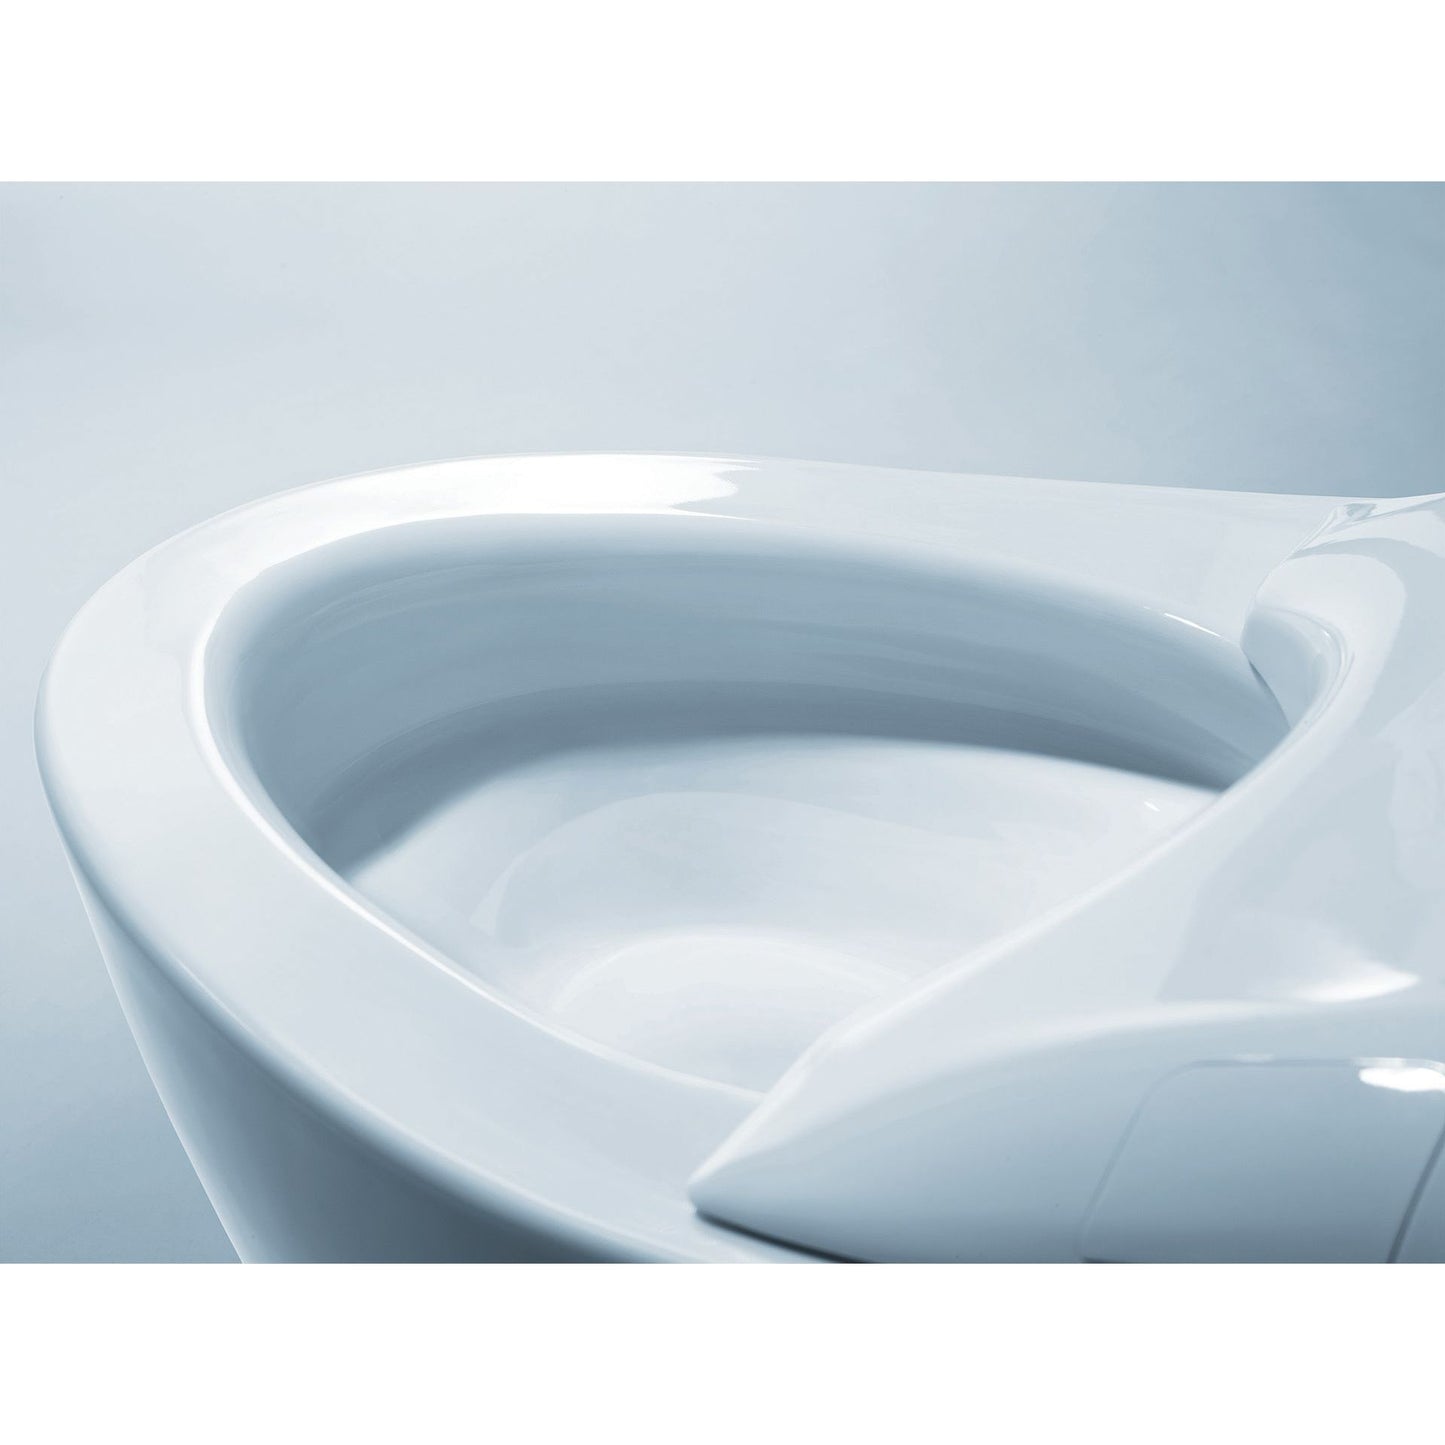 MS900CUMFG#01 - Neorest NX1 Dual Flush Toilet - Cotton White